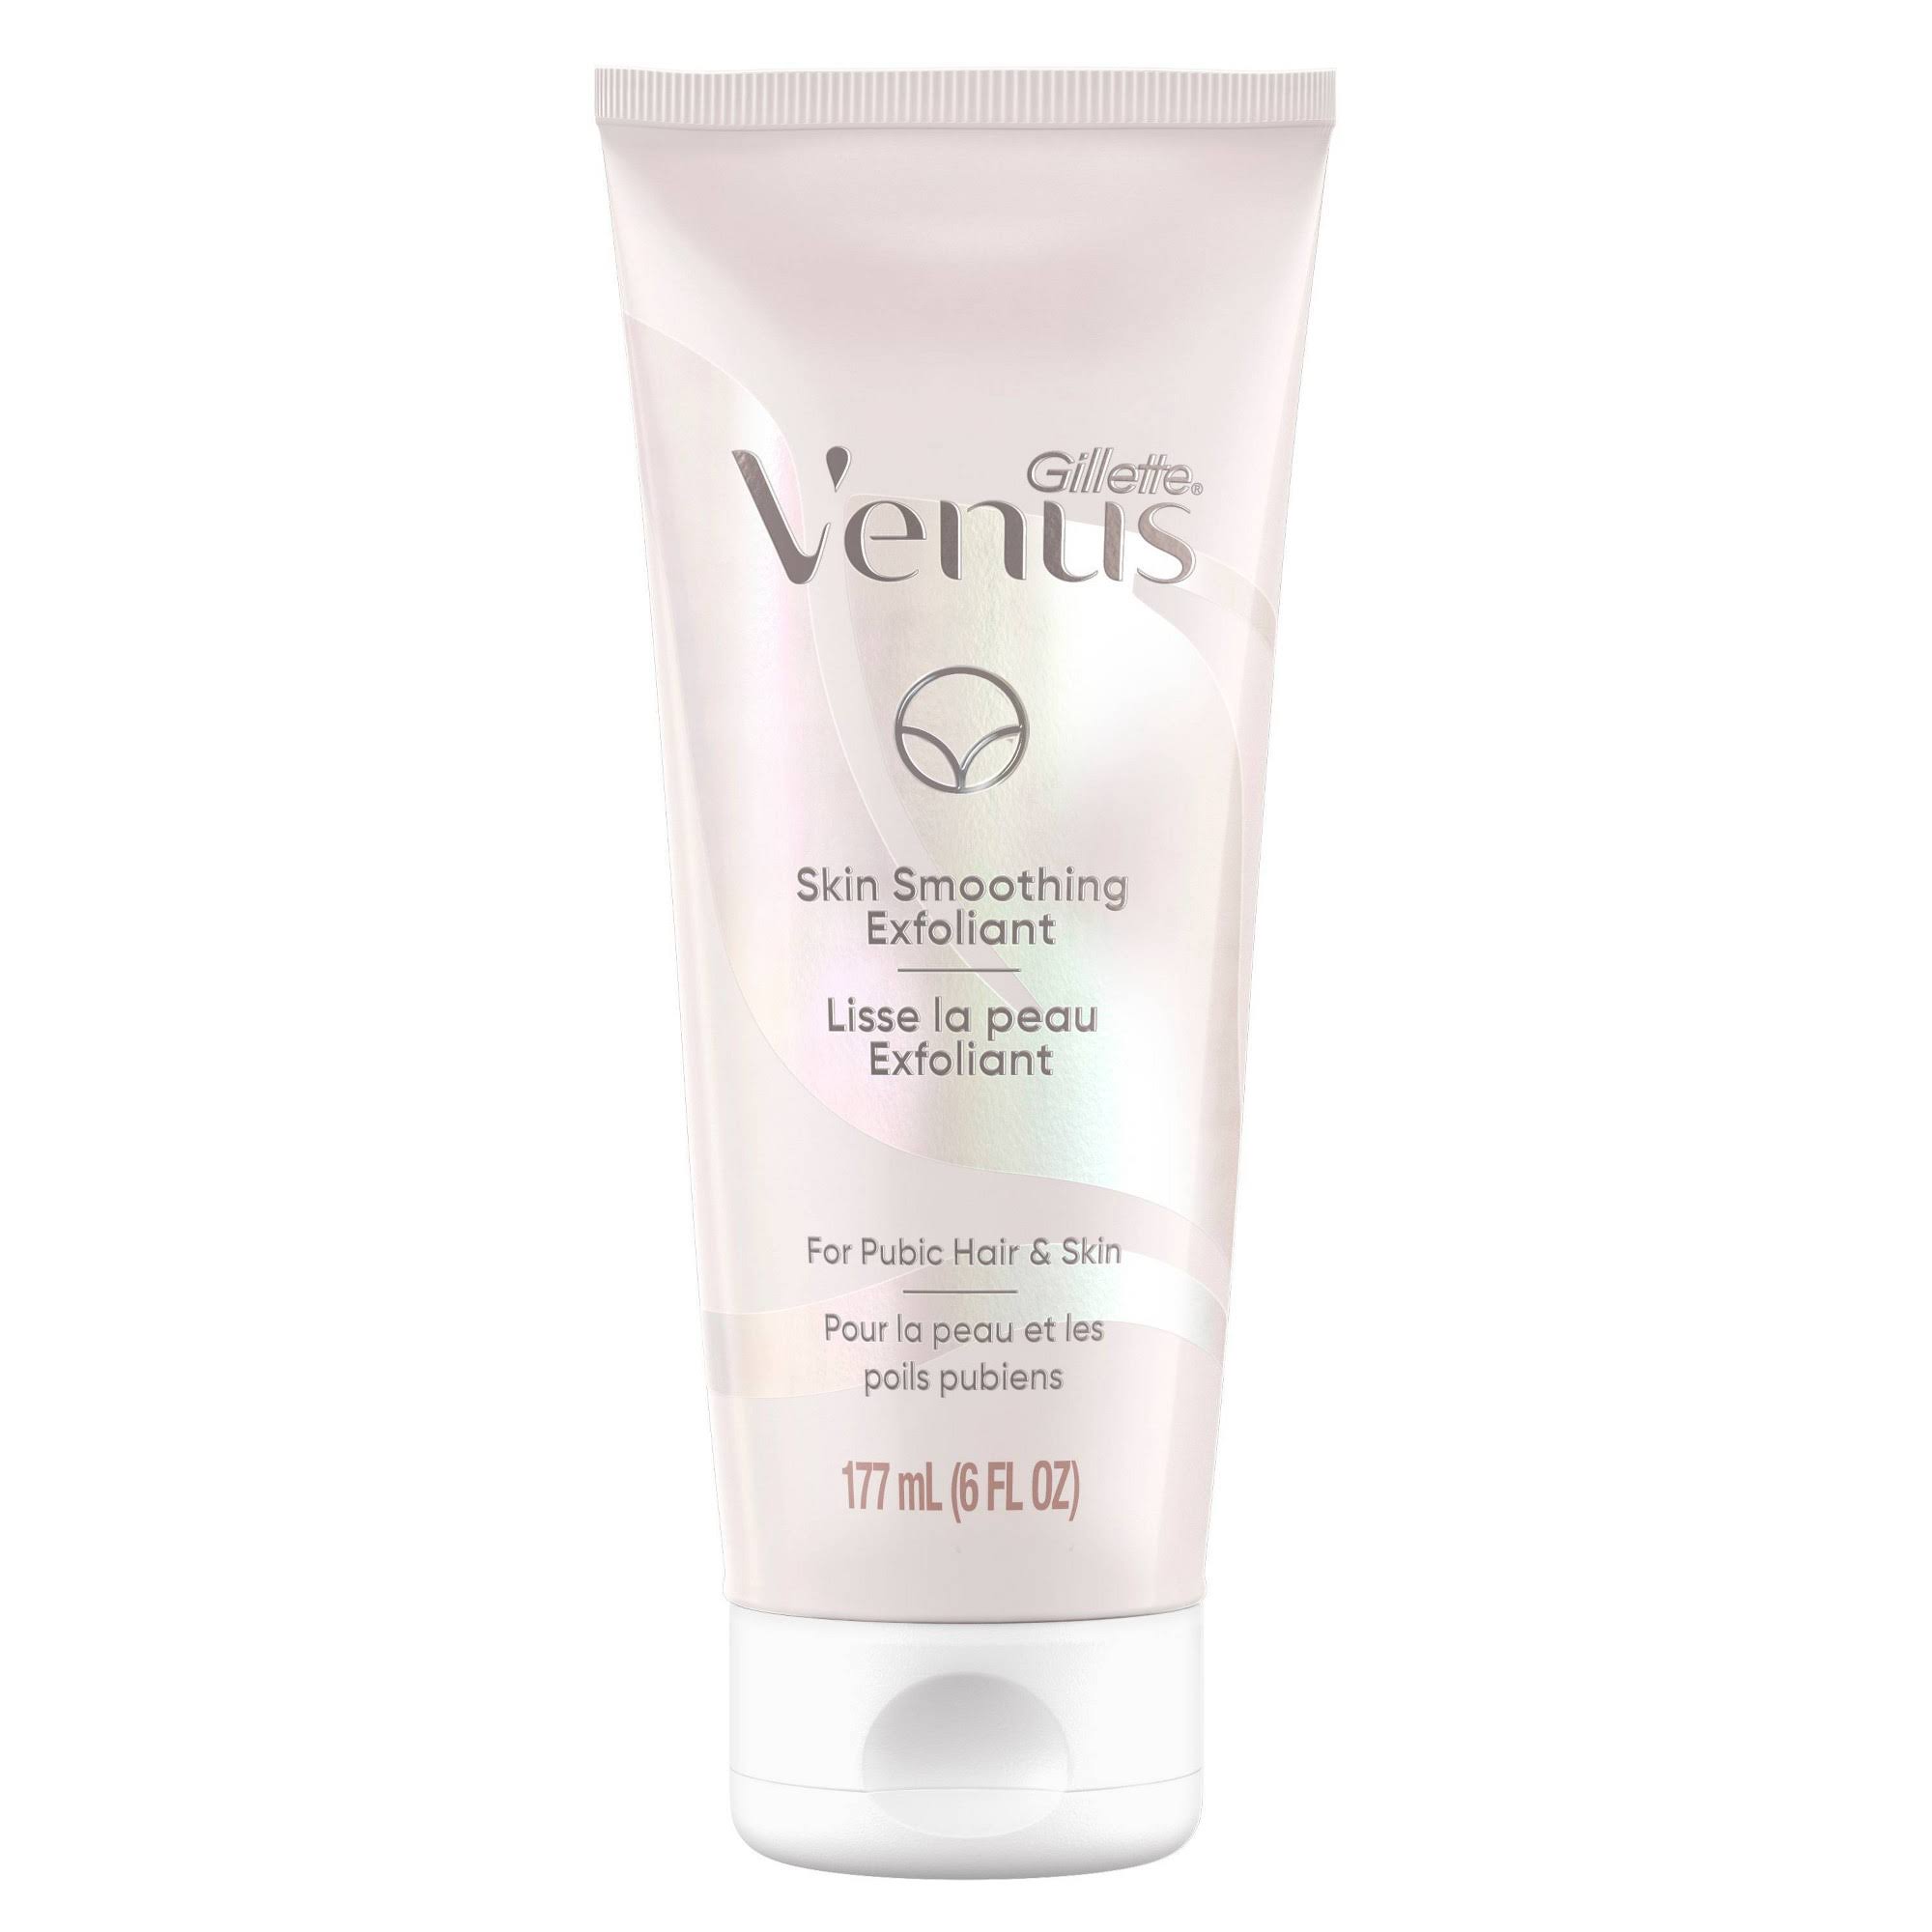 Venus Exfoliant, Skin Smoothing - 177 ml